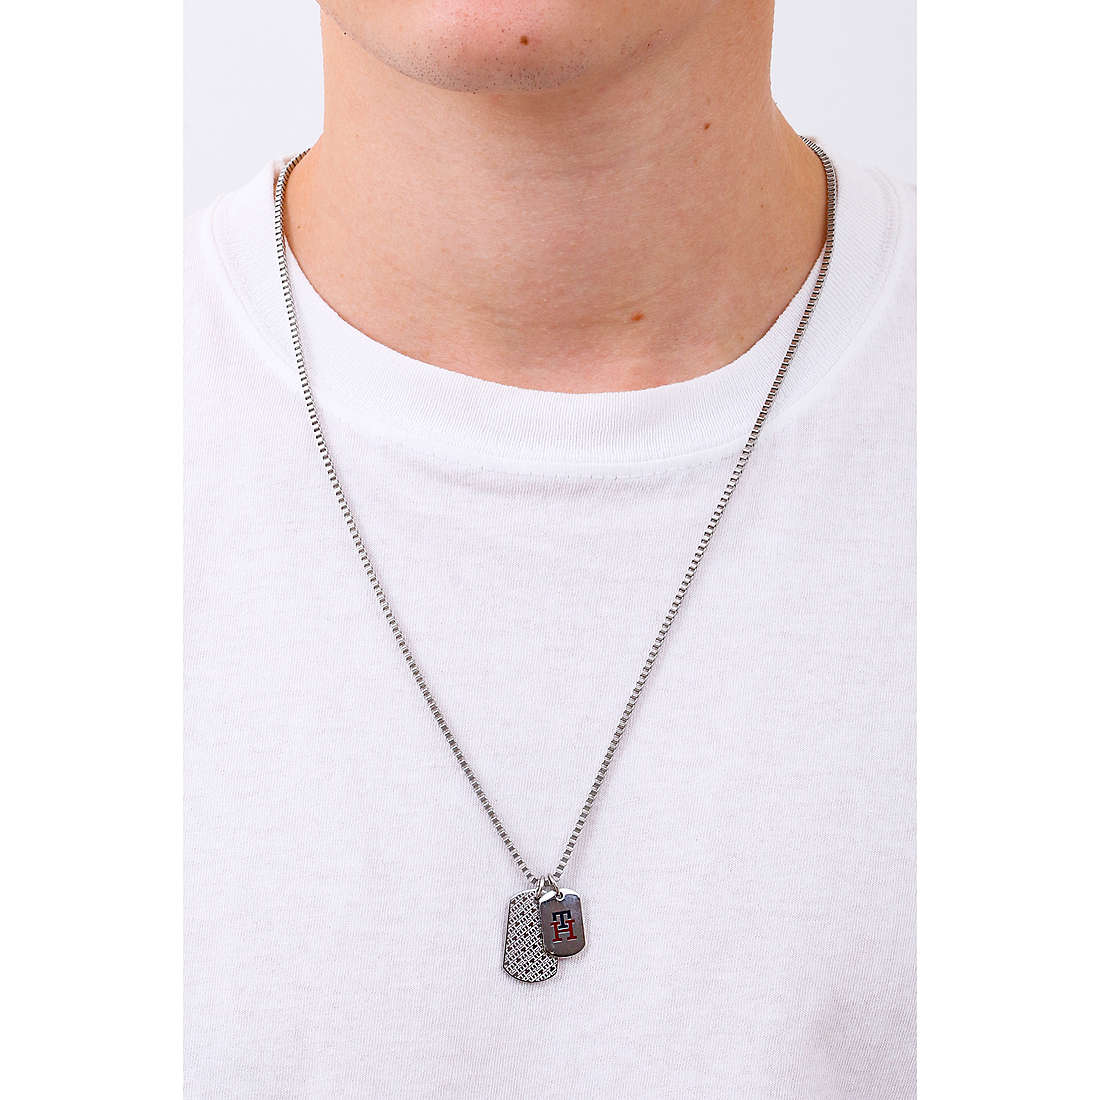 Tommy Hilfiger necklaces Monogram man 2790465 wearing